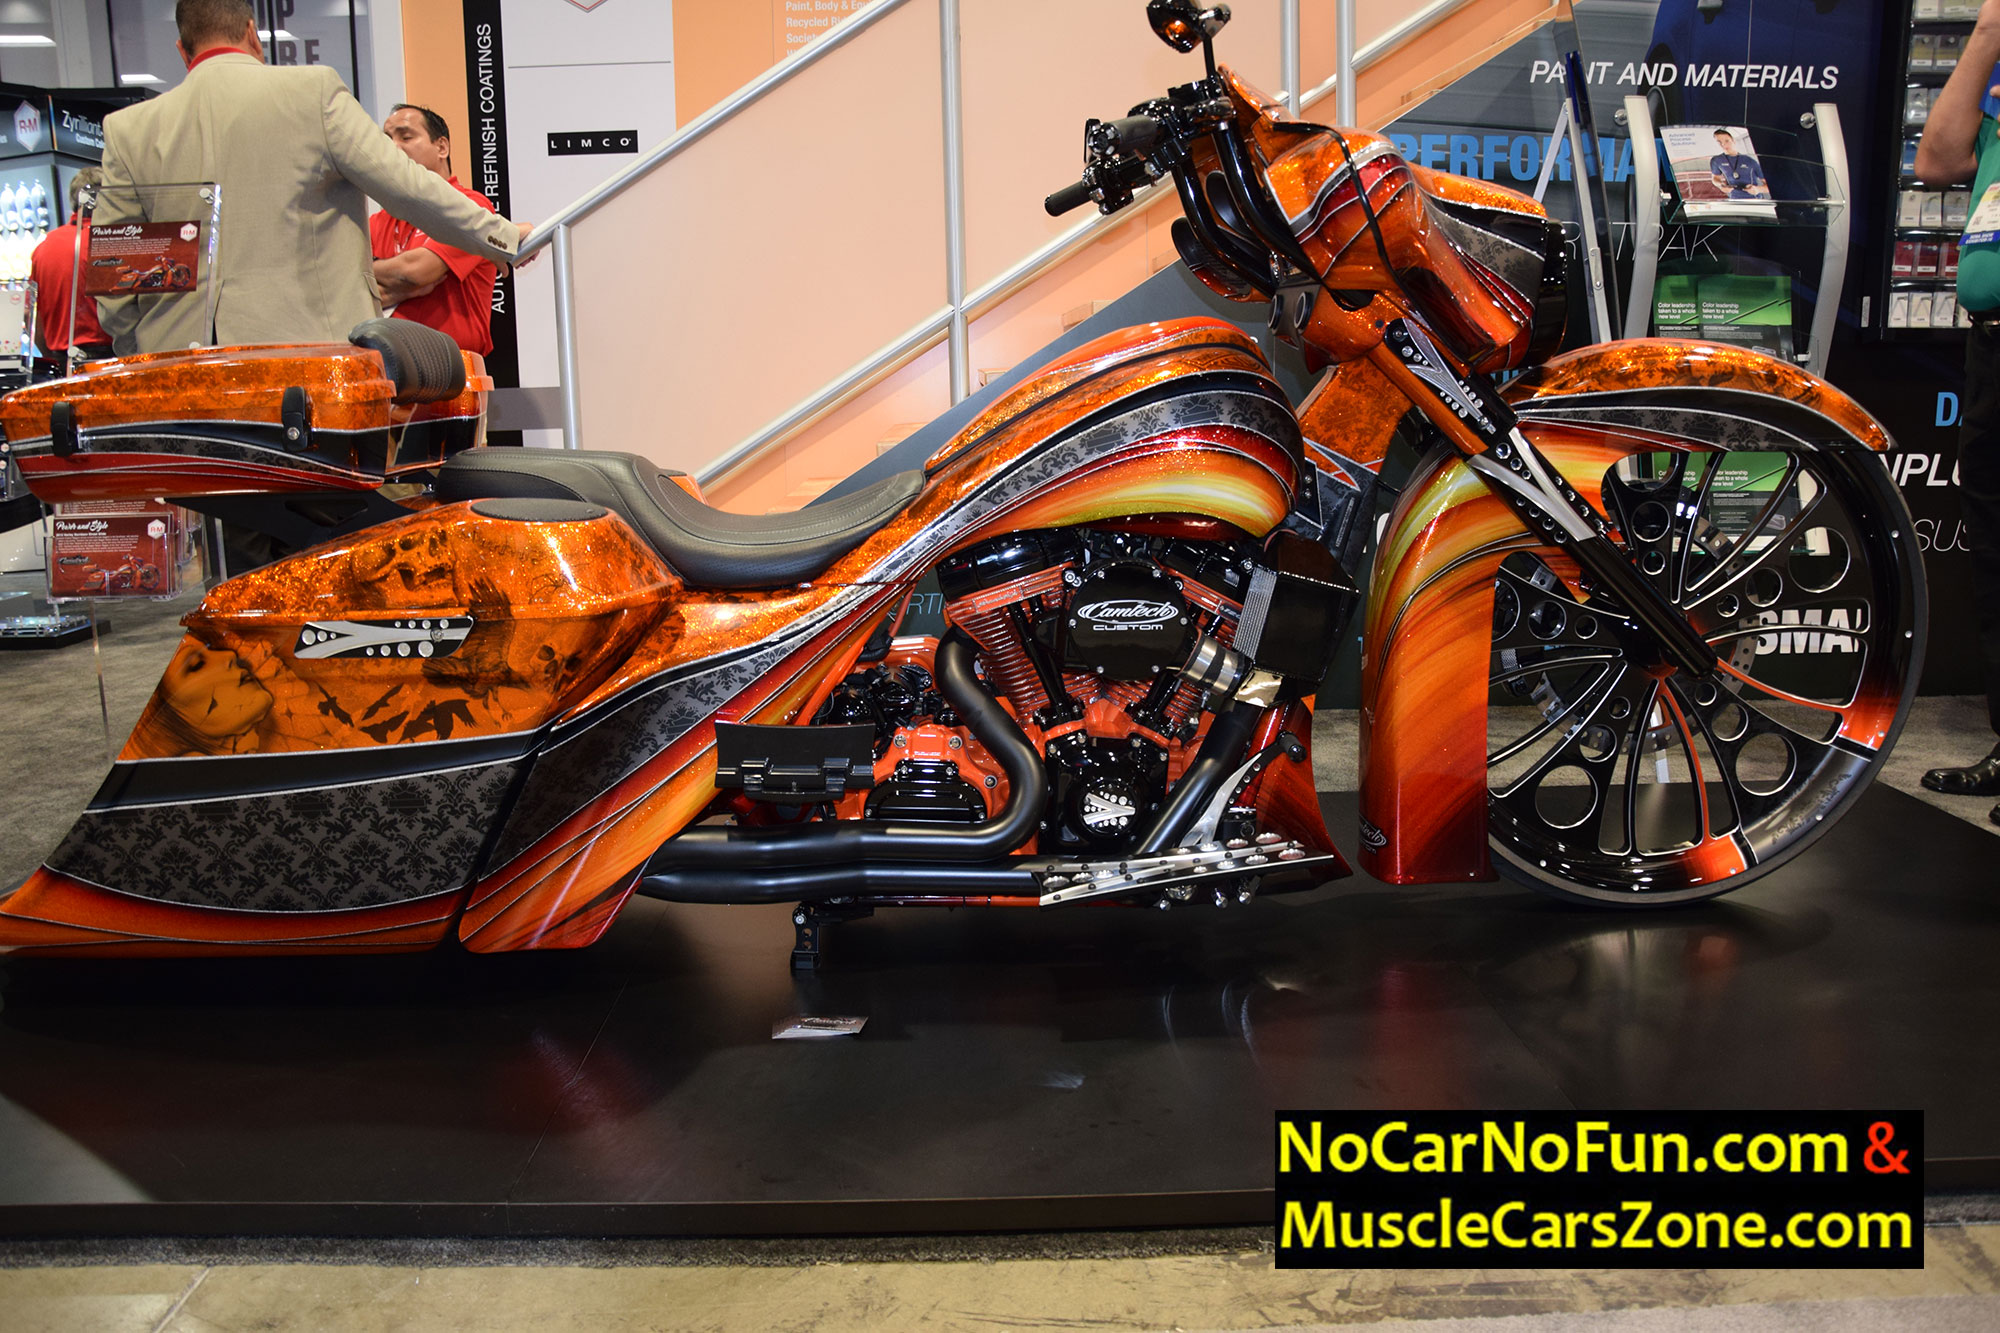 Bagged Bike Motorcycle 4 - Sema Show 2016 Vegas